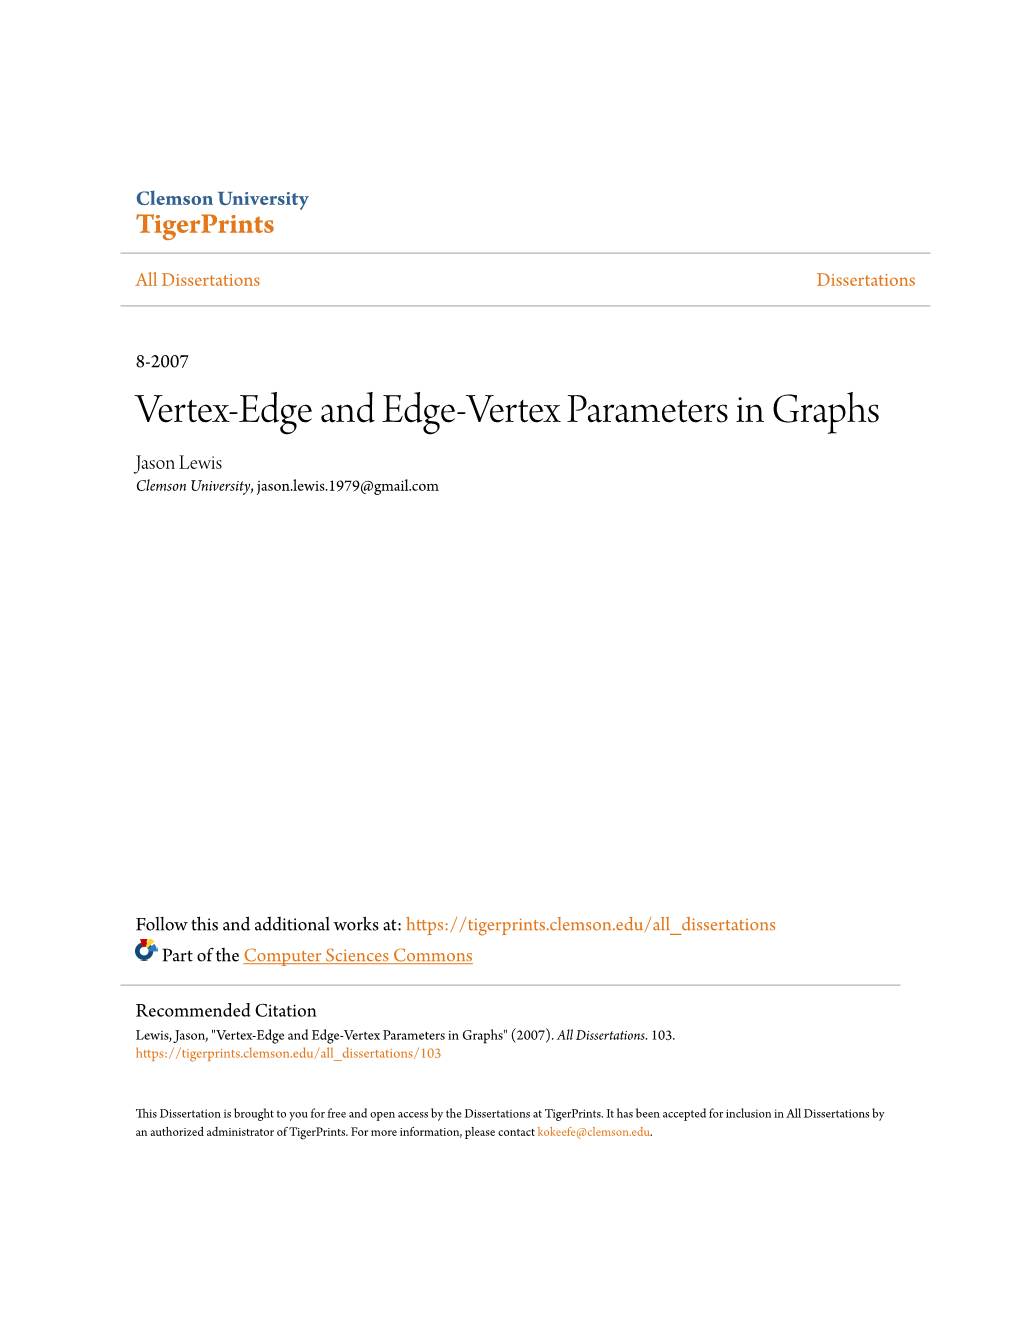 Vertex-Edge and Edge-Vertex Parameters in Graphs Jason Lewis Clemson University, Jason.Lewis.1979@Gmail.Com